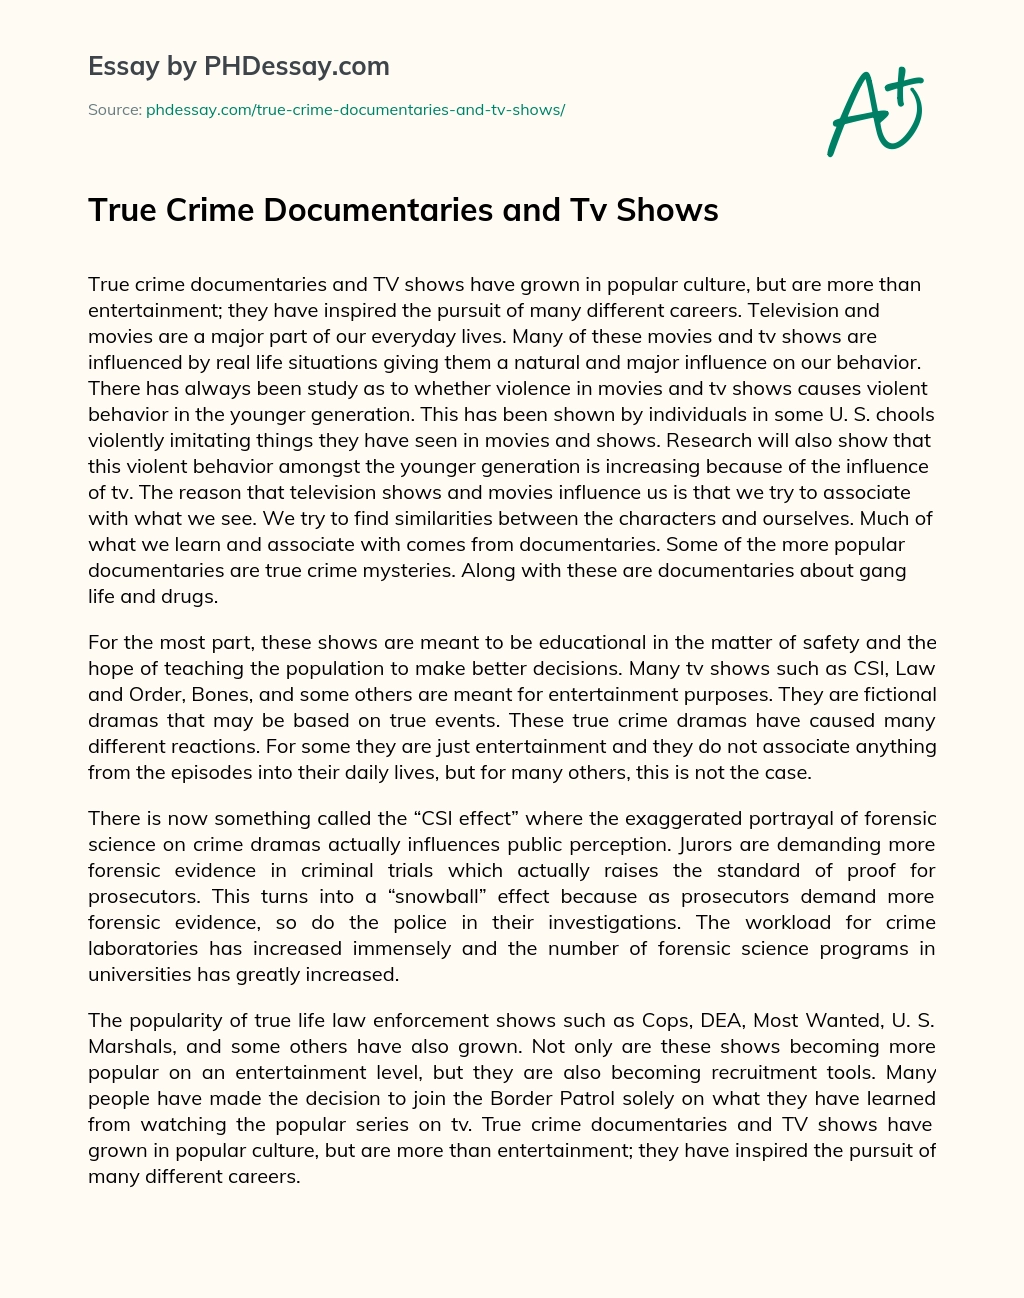 True Crime Documentaries and Tv Shows essay